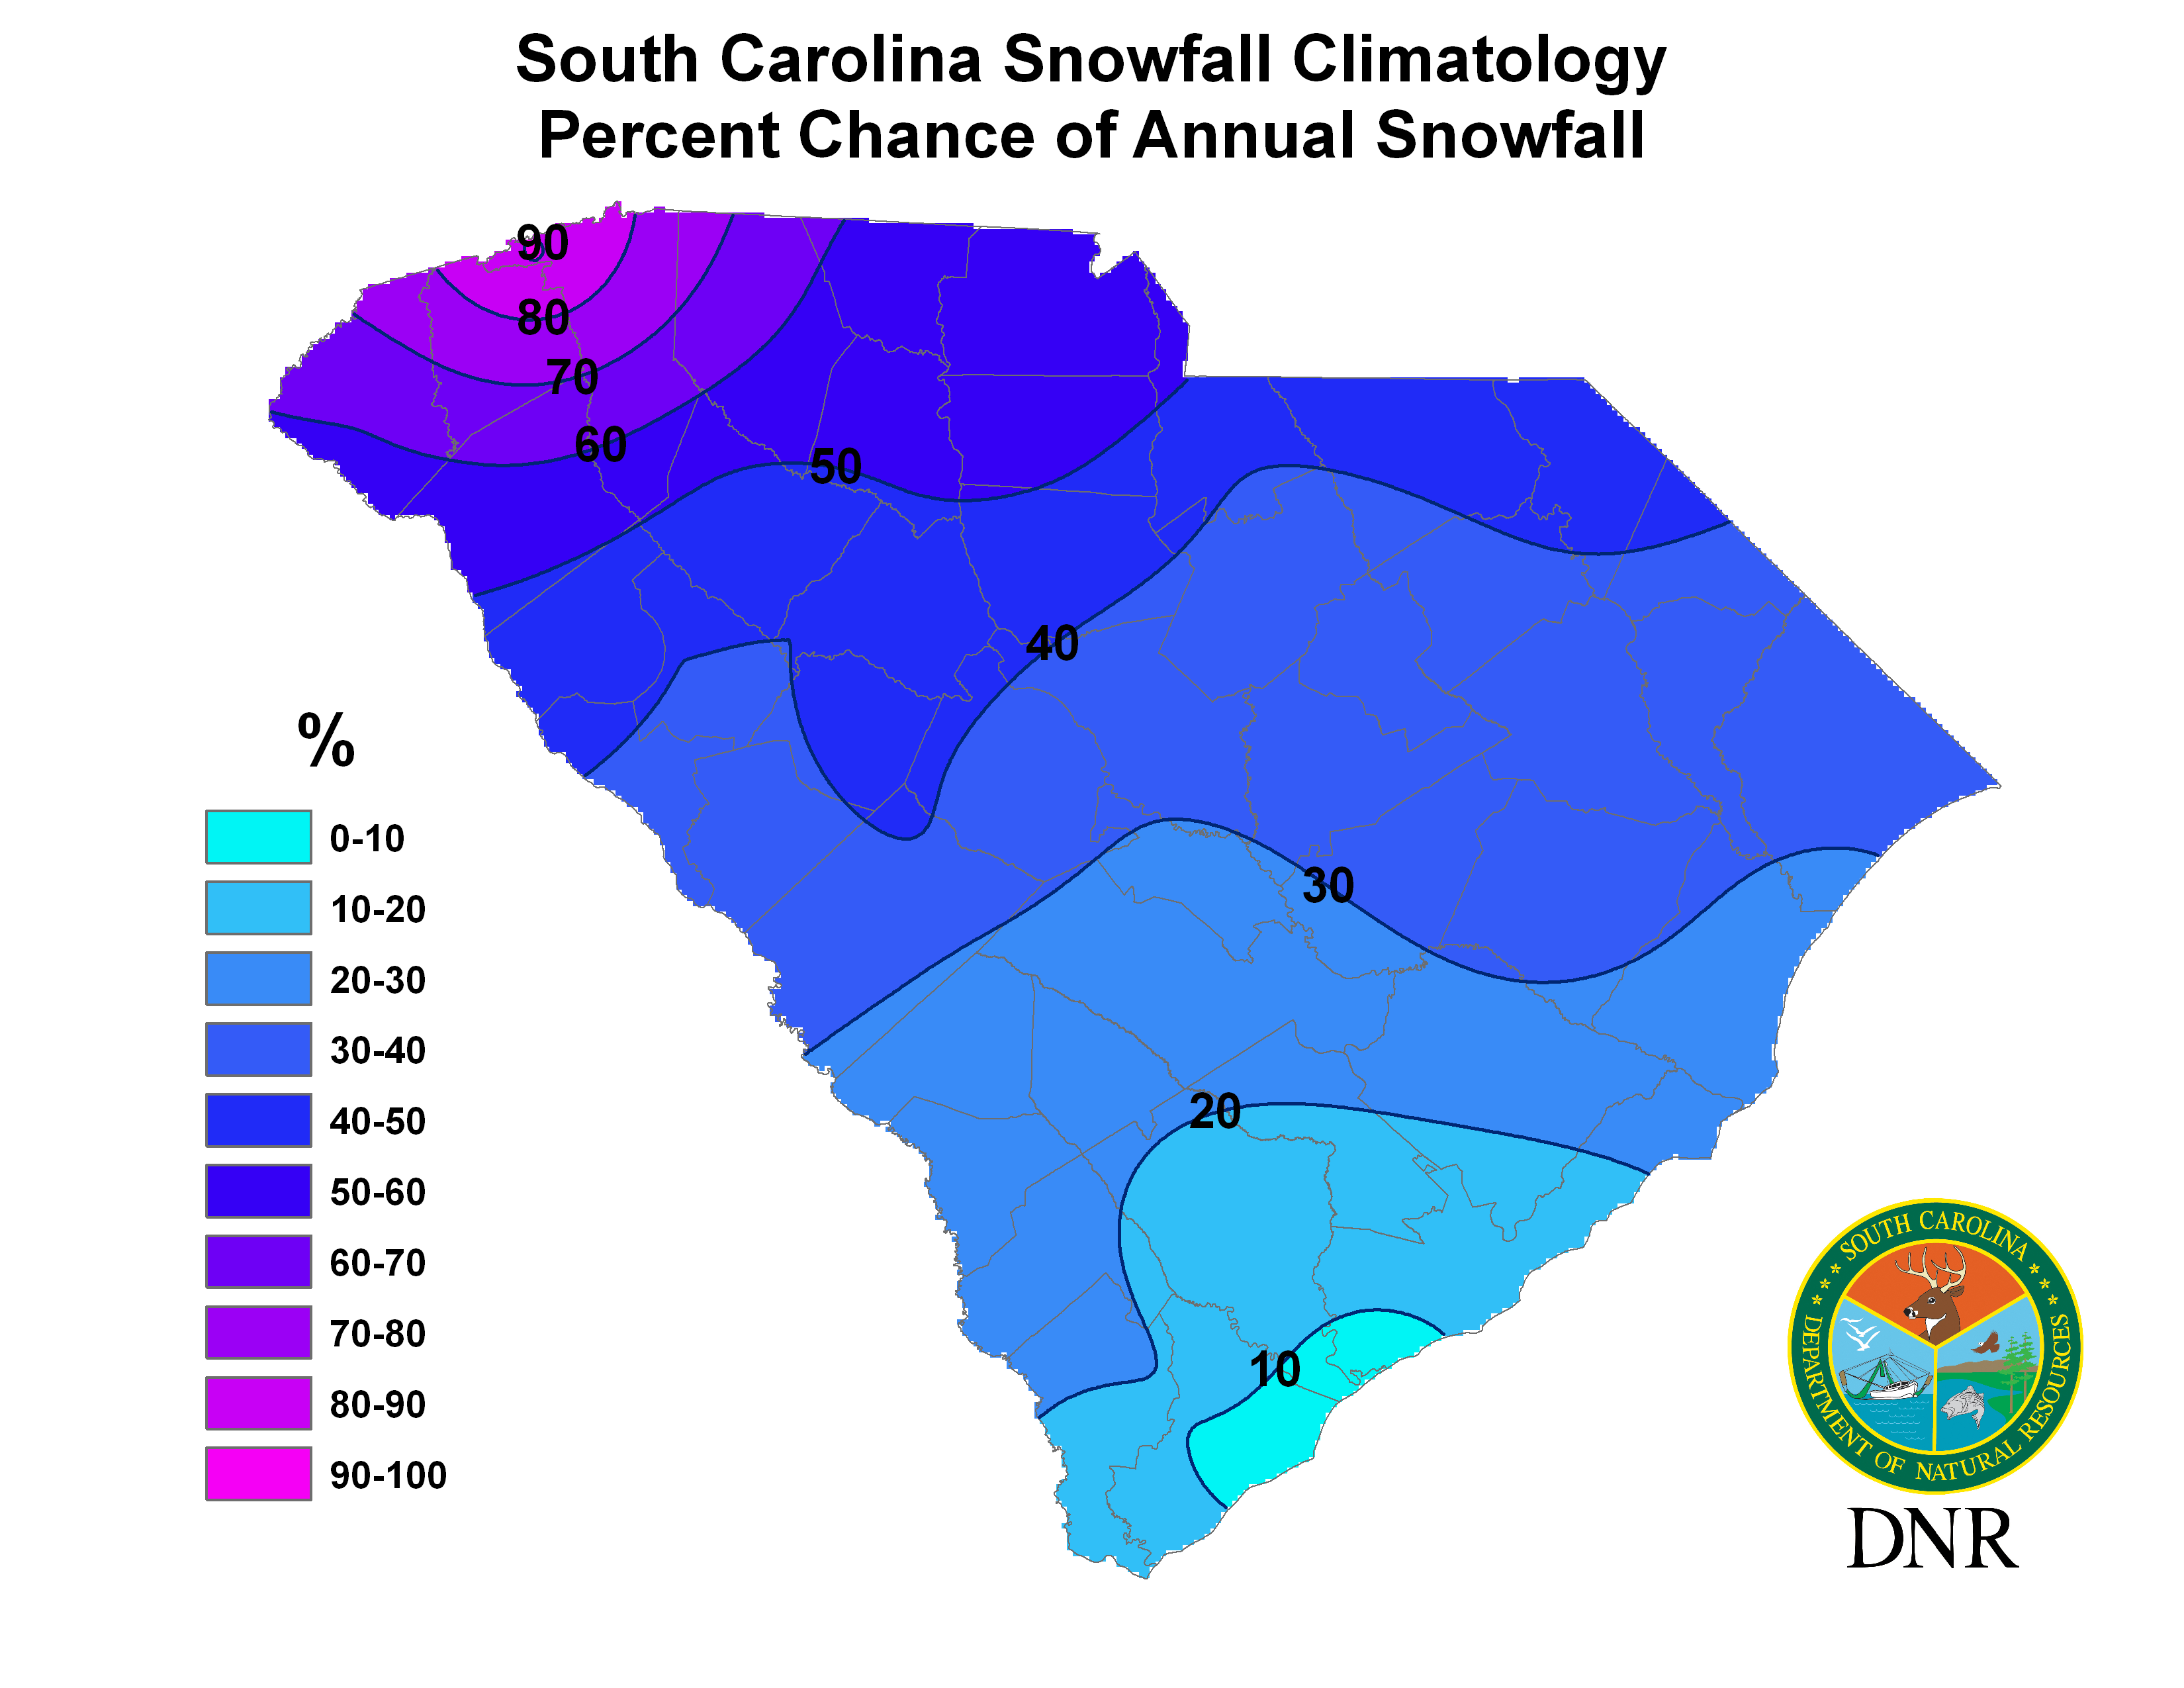 South Carolina State Climatology Office